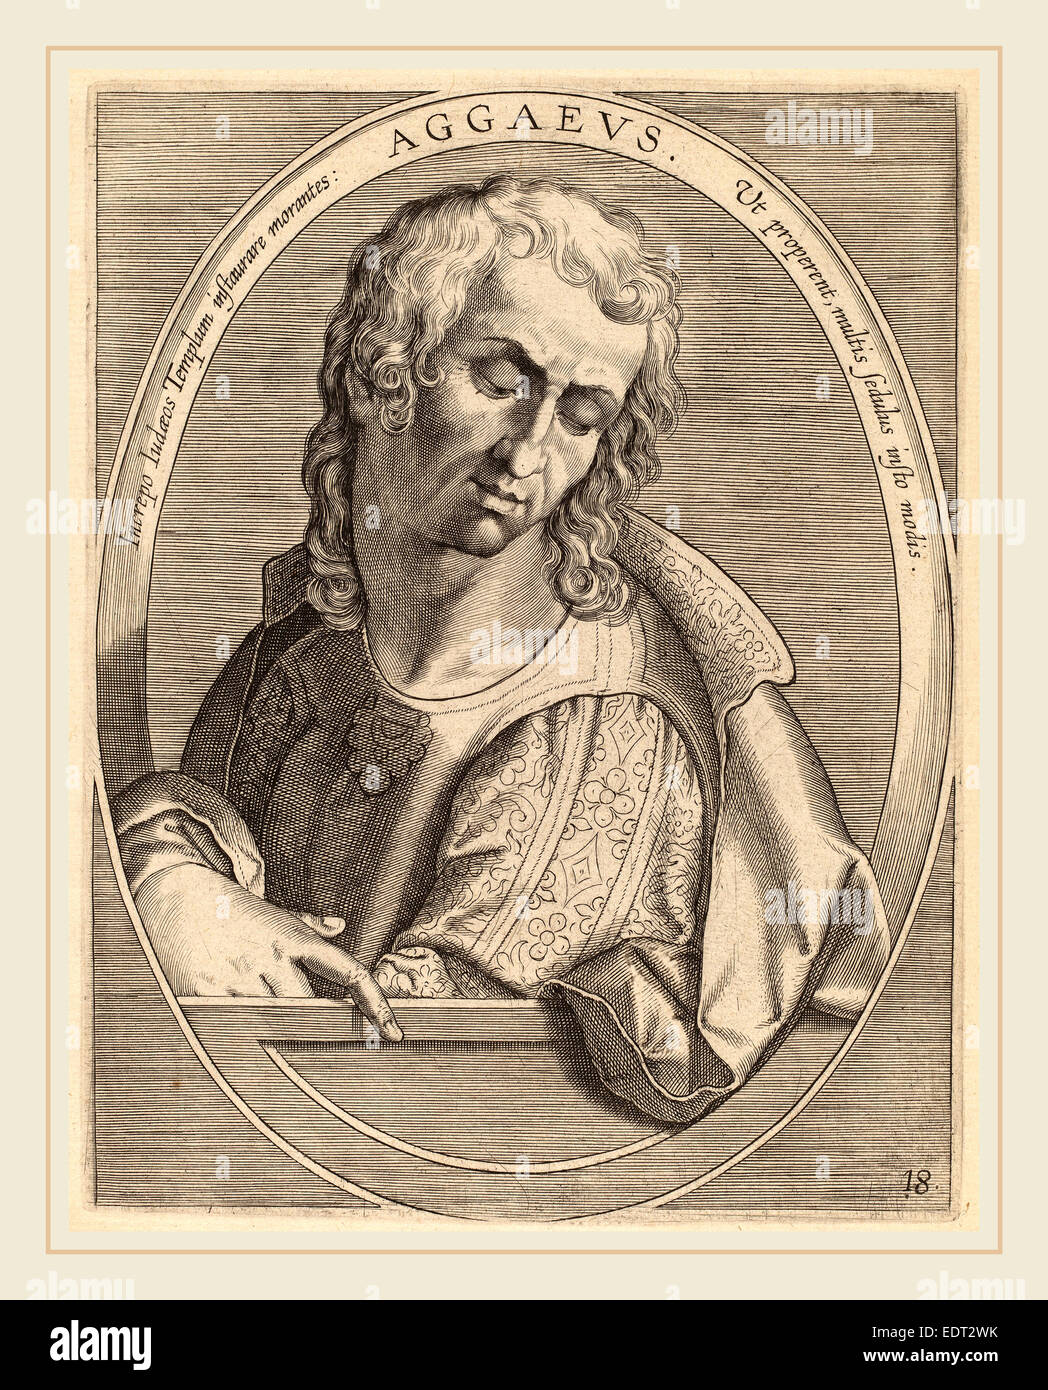 Theodor Galle after Jan van der Straet (Flemish, c. 1571-1633), Aggaeus, published 1613, engraving on laid paper Stock Photo